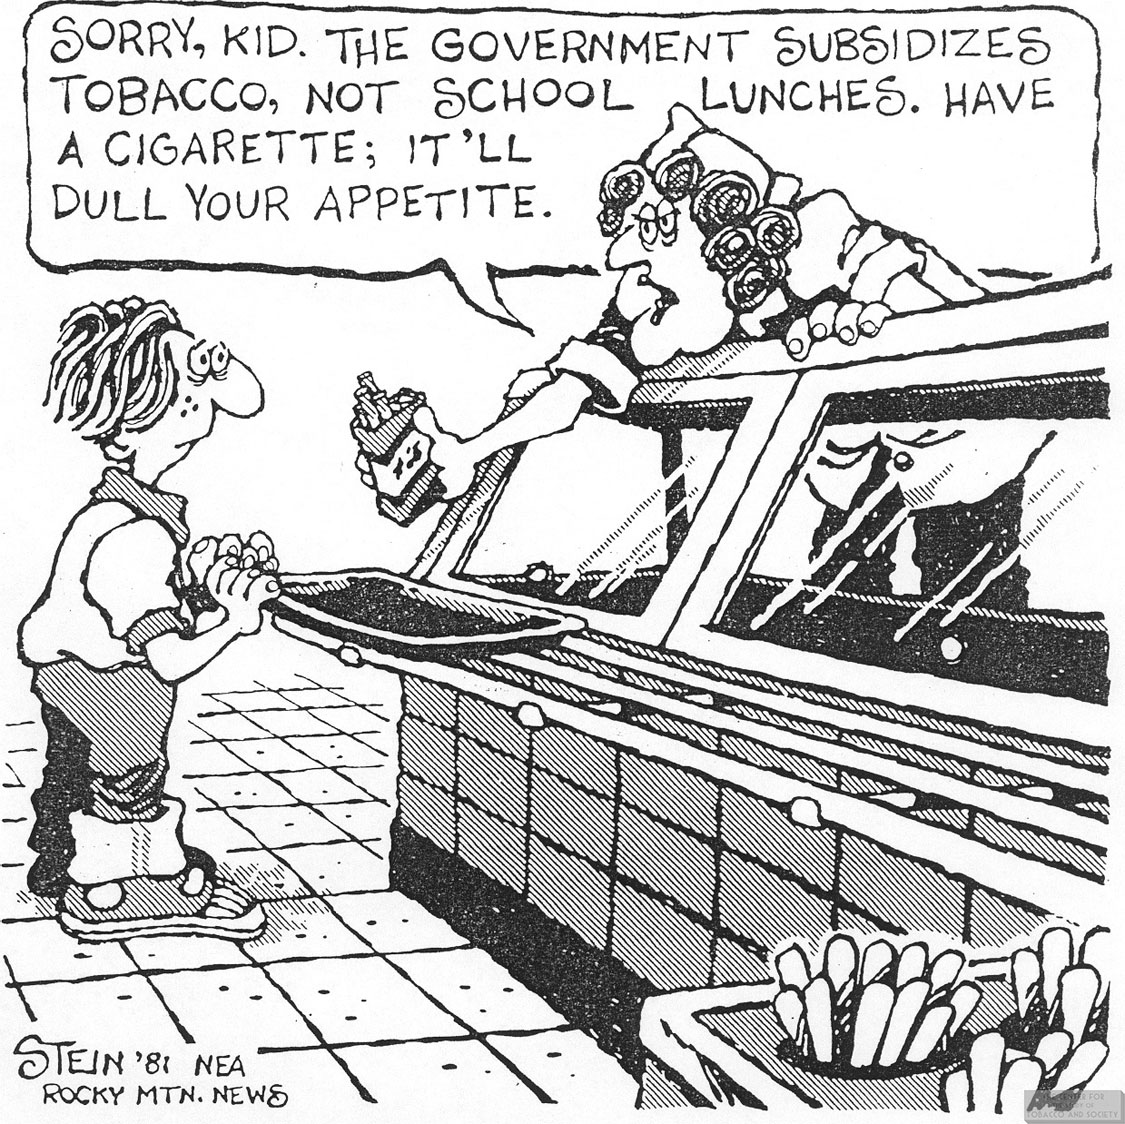 Stein Cartoon No School Lunch Subsidies 1